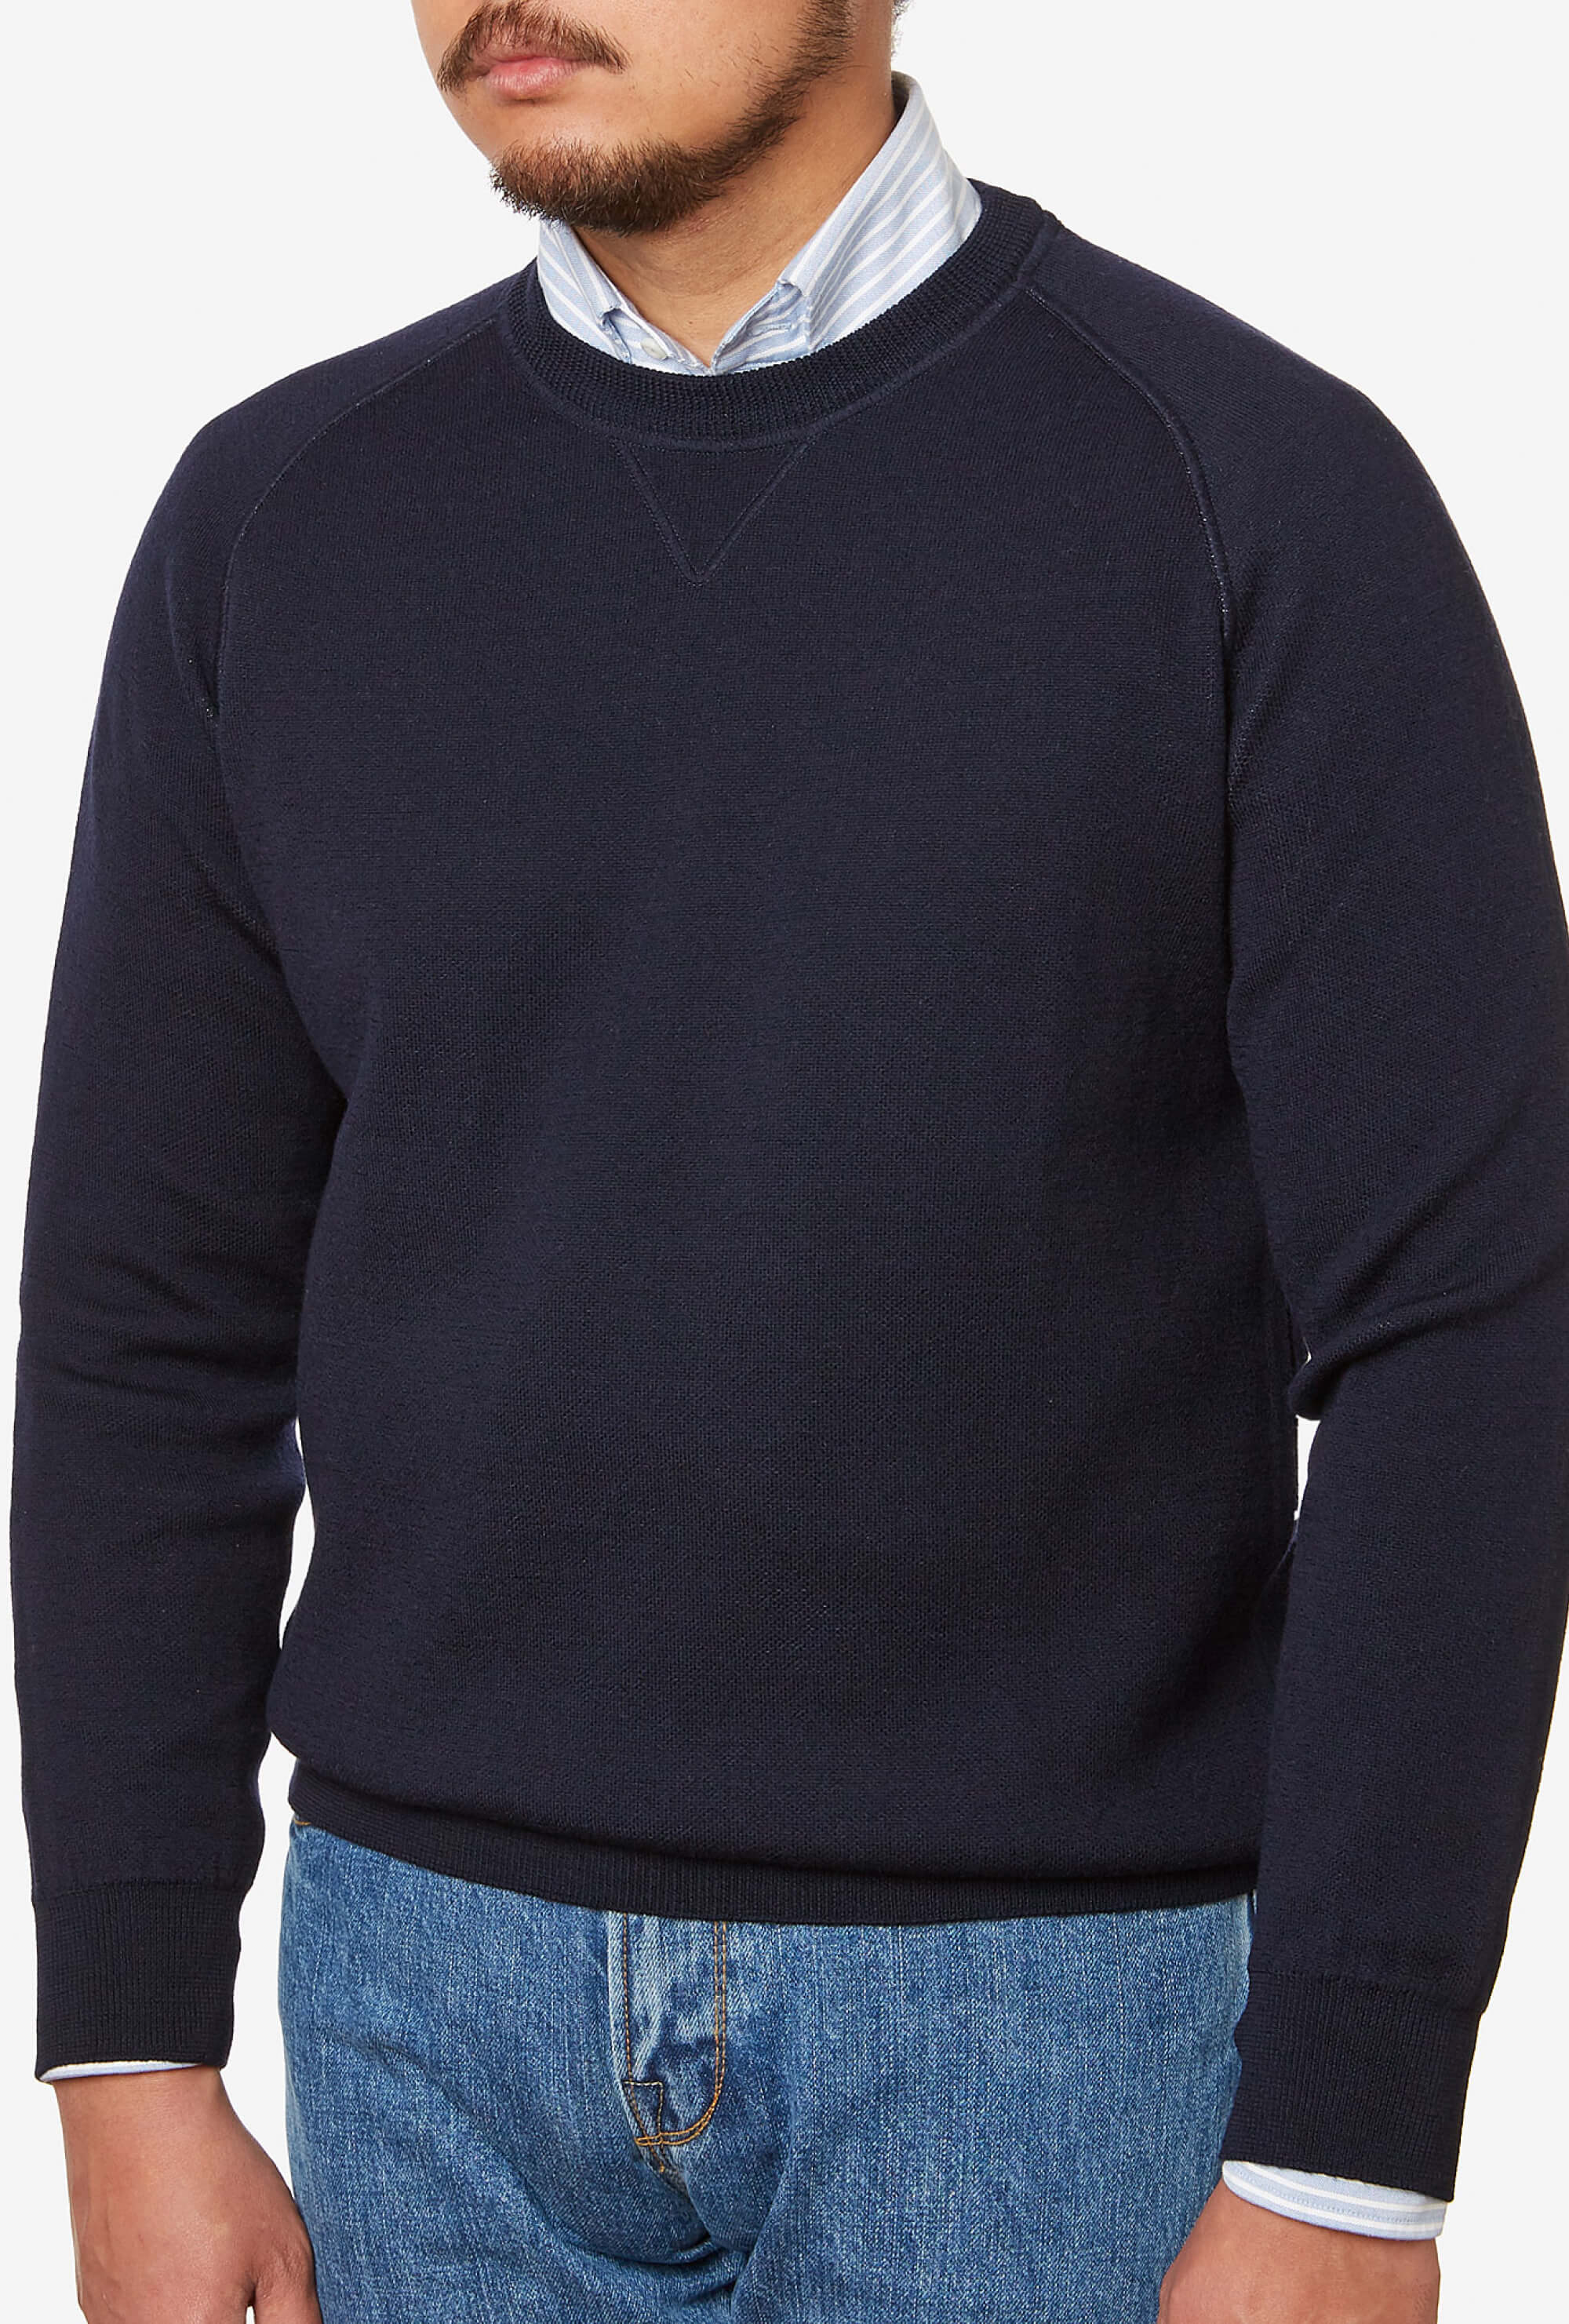 Sport Sweatshirt Merino Cotton Navy